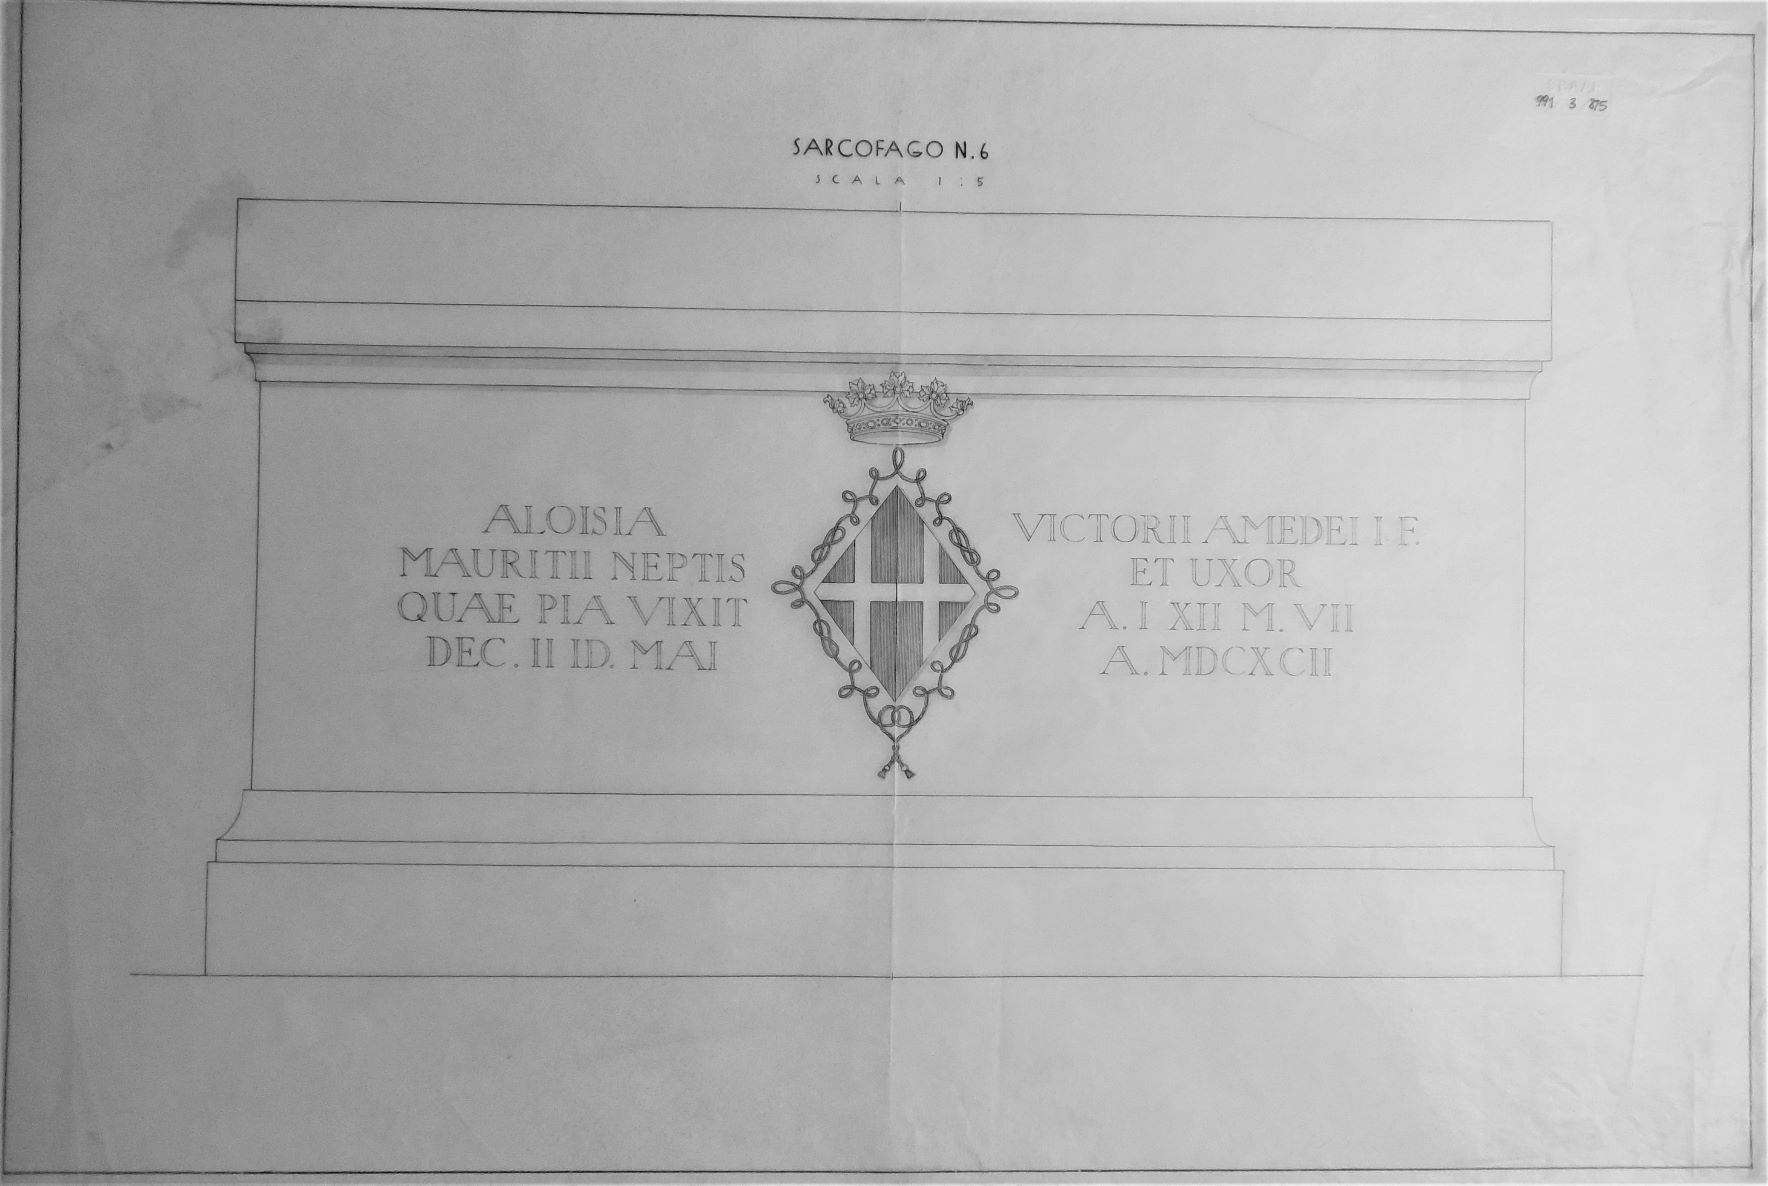 Sacra di San Michele/ Sarcofago n. 6 - scala 1:5, Sacra di San Michele a Sant'Ambrogio di Susa (TO) - Sarcofago n. 6 - scala 1:5 (disegno) di Chierici Umberto (cerchia) (secondo quarto sec. XX)